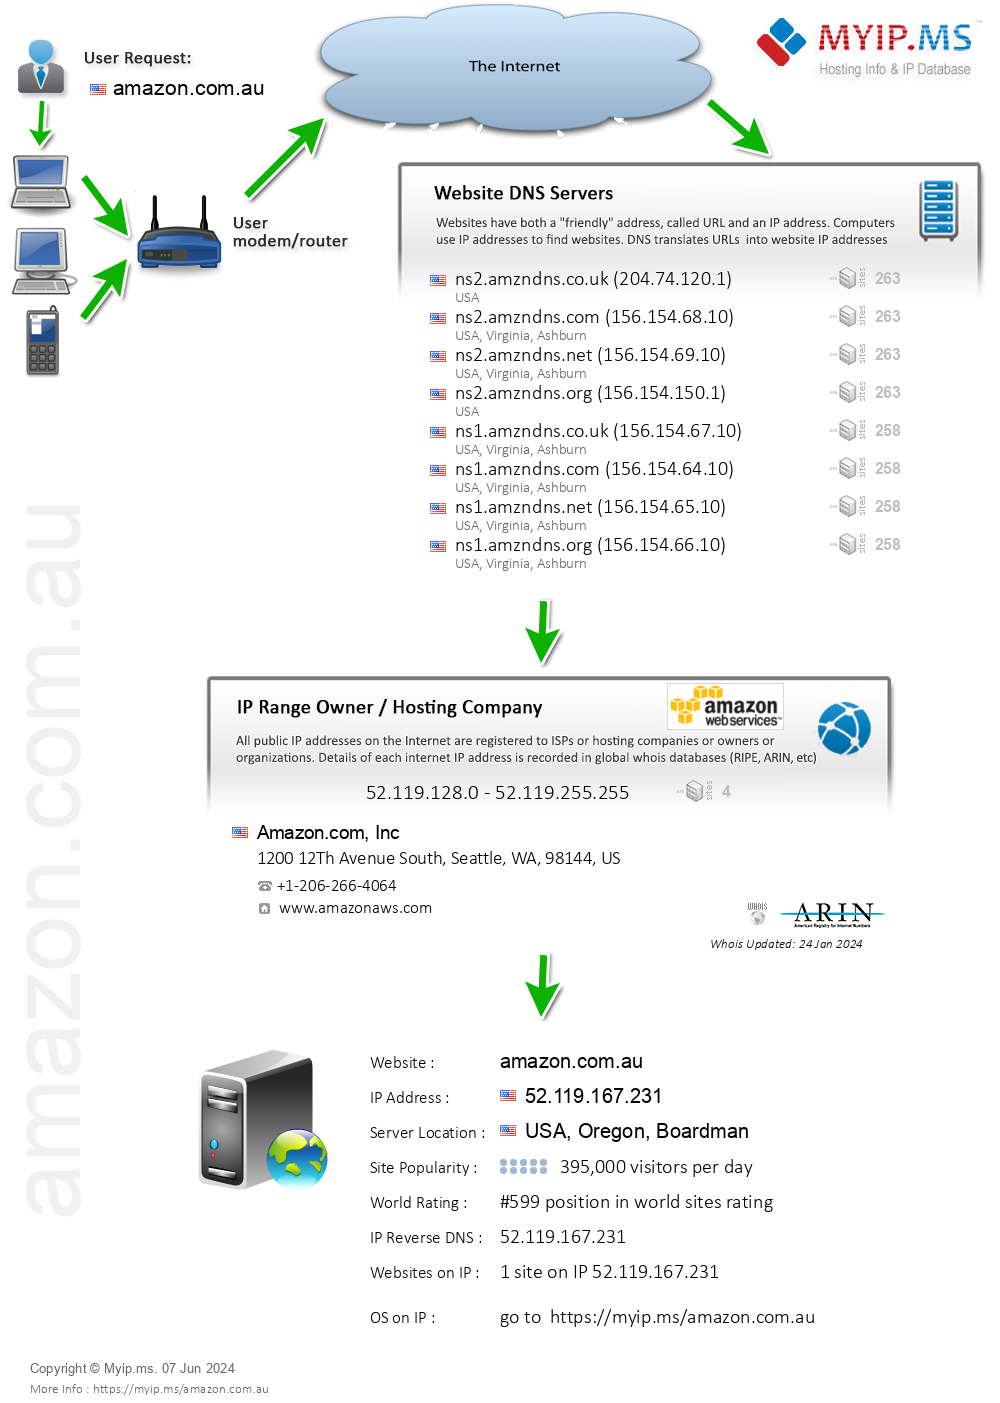 Amazon.com.au - Website Hosting Visual IP Diagram